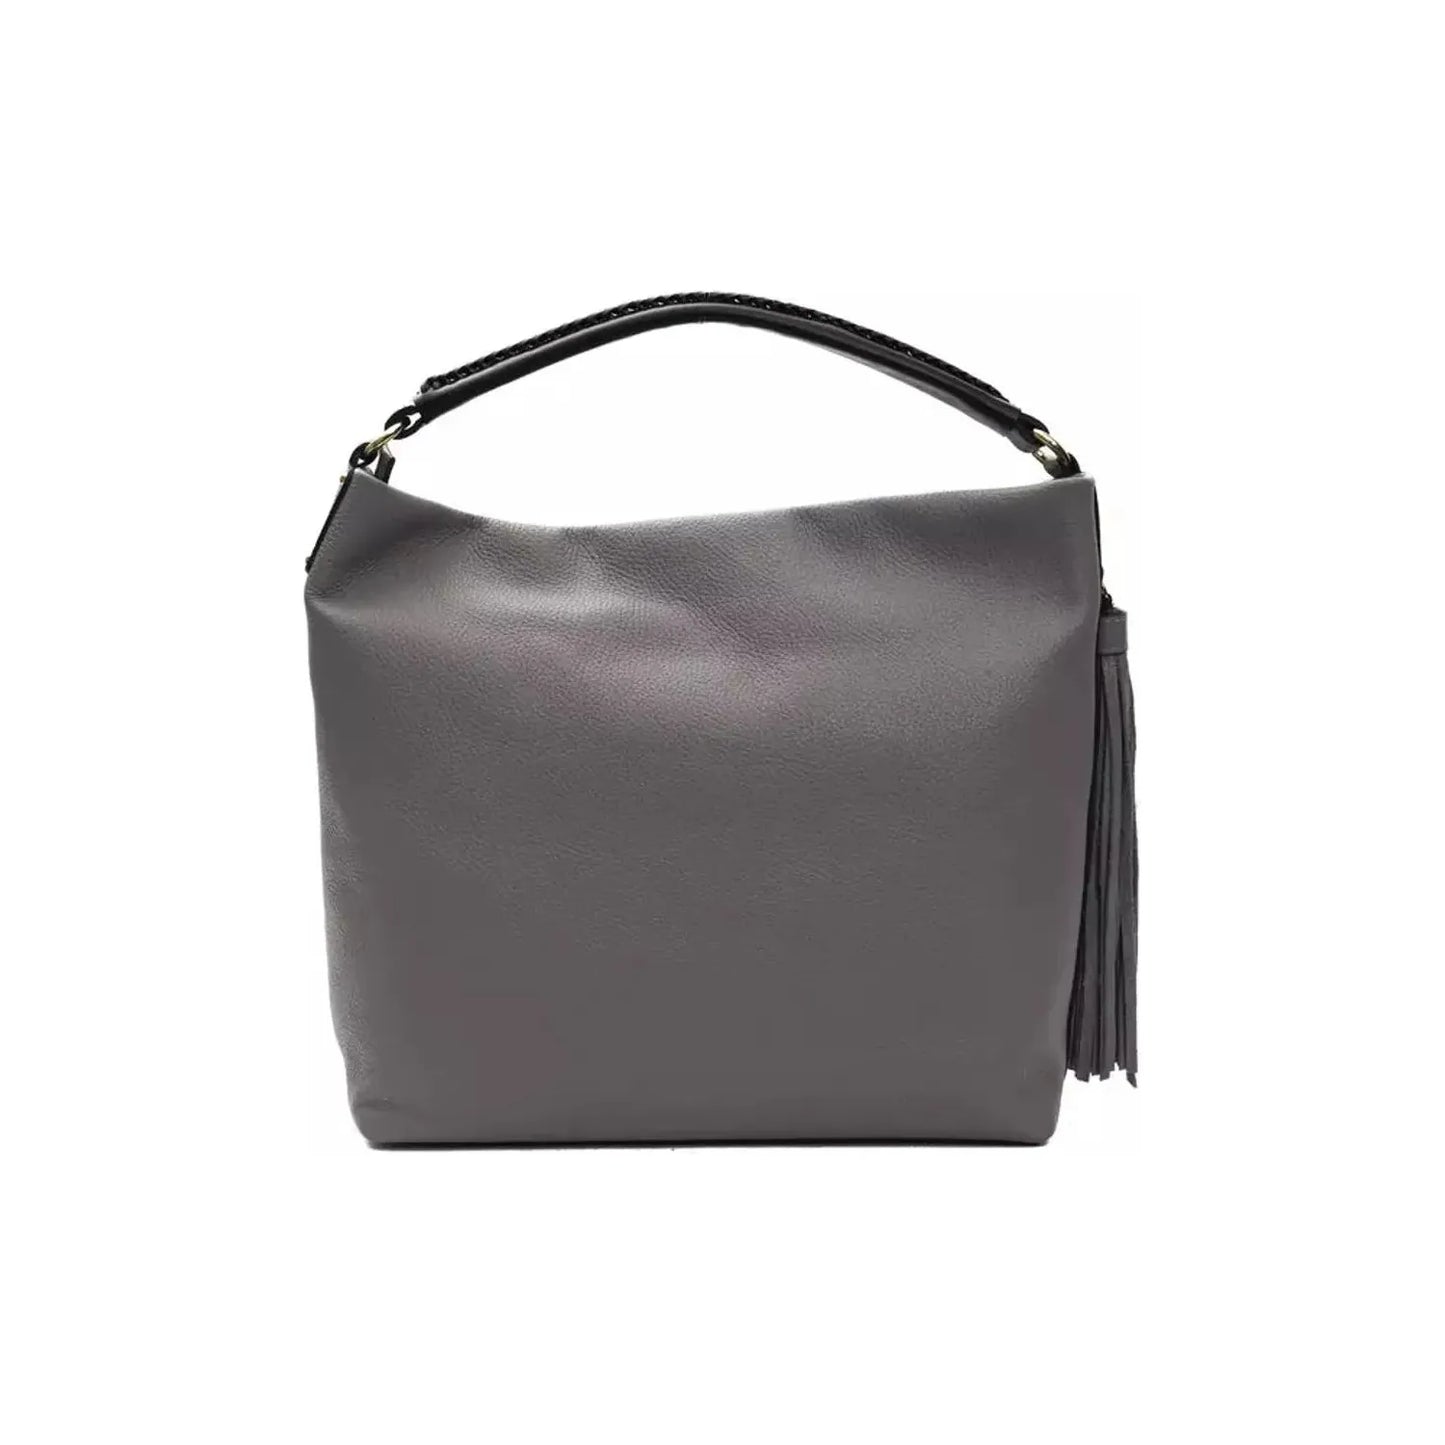 Pompei Donatella Chic Gray Leather Shoulder Bag WOMAN SHOULDER BAGS gray-leather-shoulder-bag-2 stock_product_image_5800_1177332362-21-30a77a29-c6b.webp